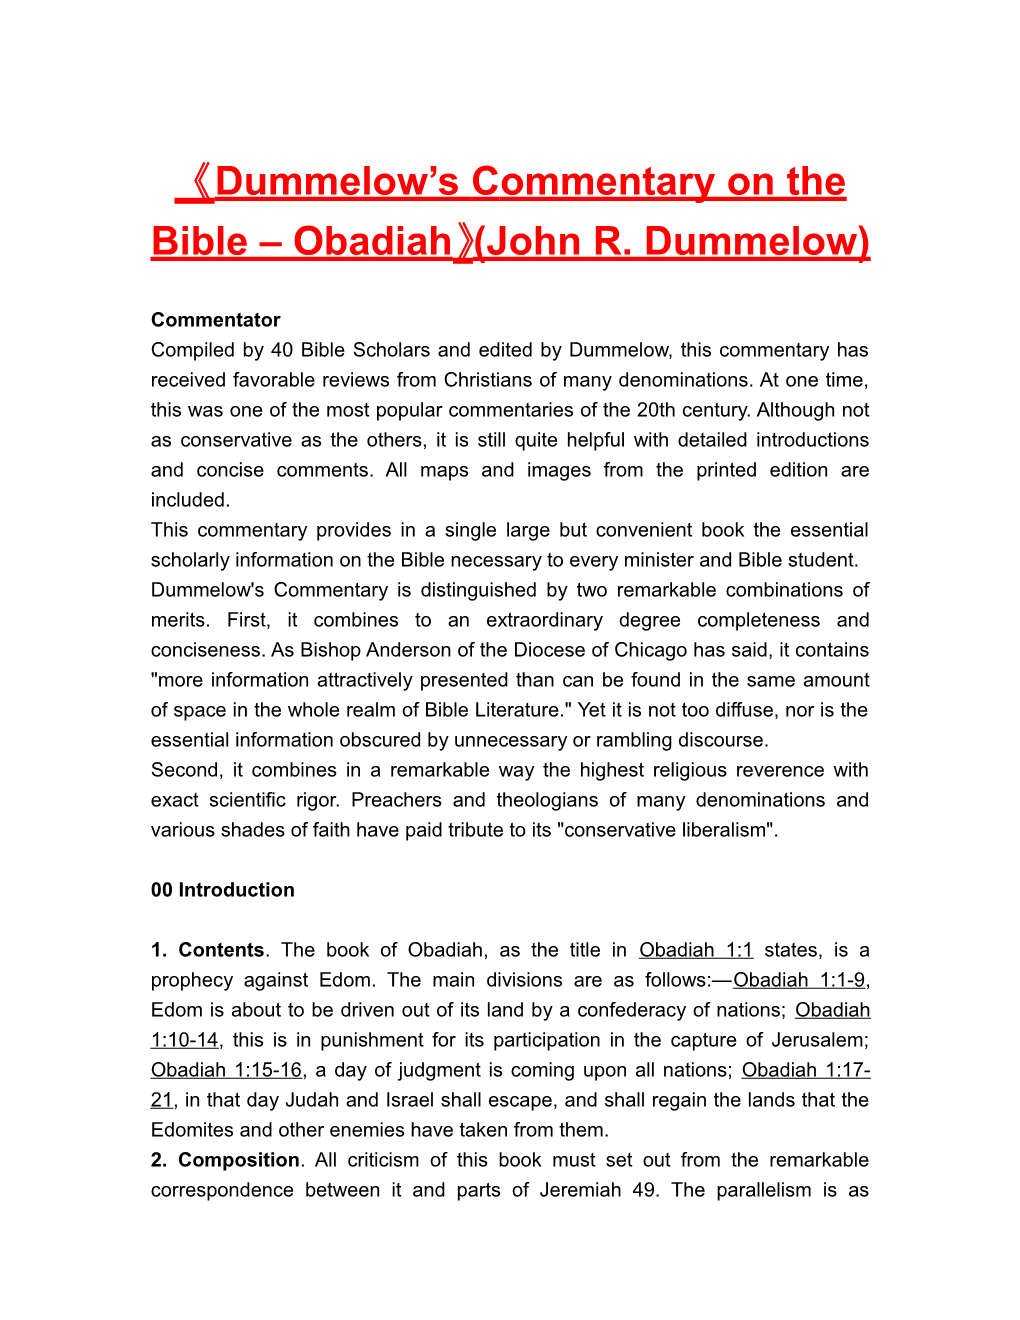 Dummelow Scommentaryon the Bible Obadiah (John R. Dummelow)